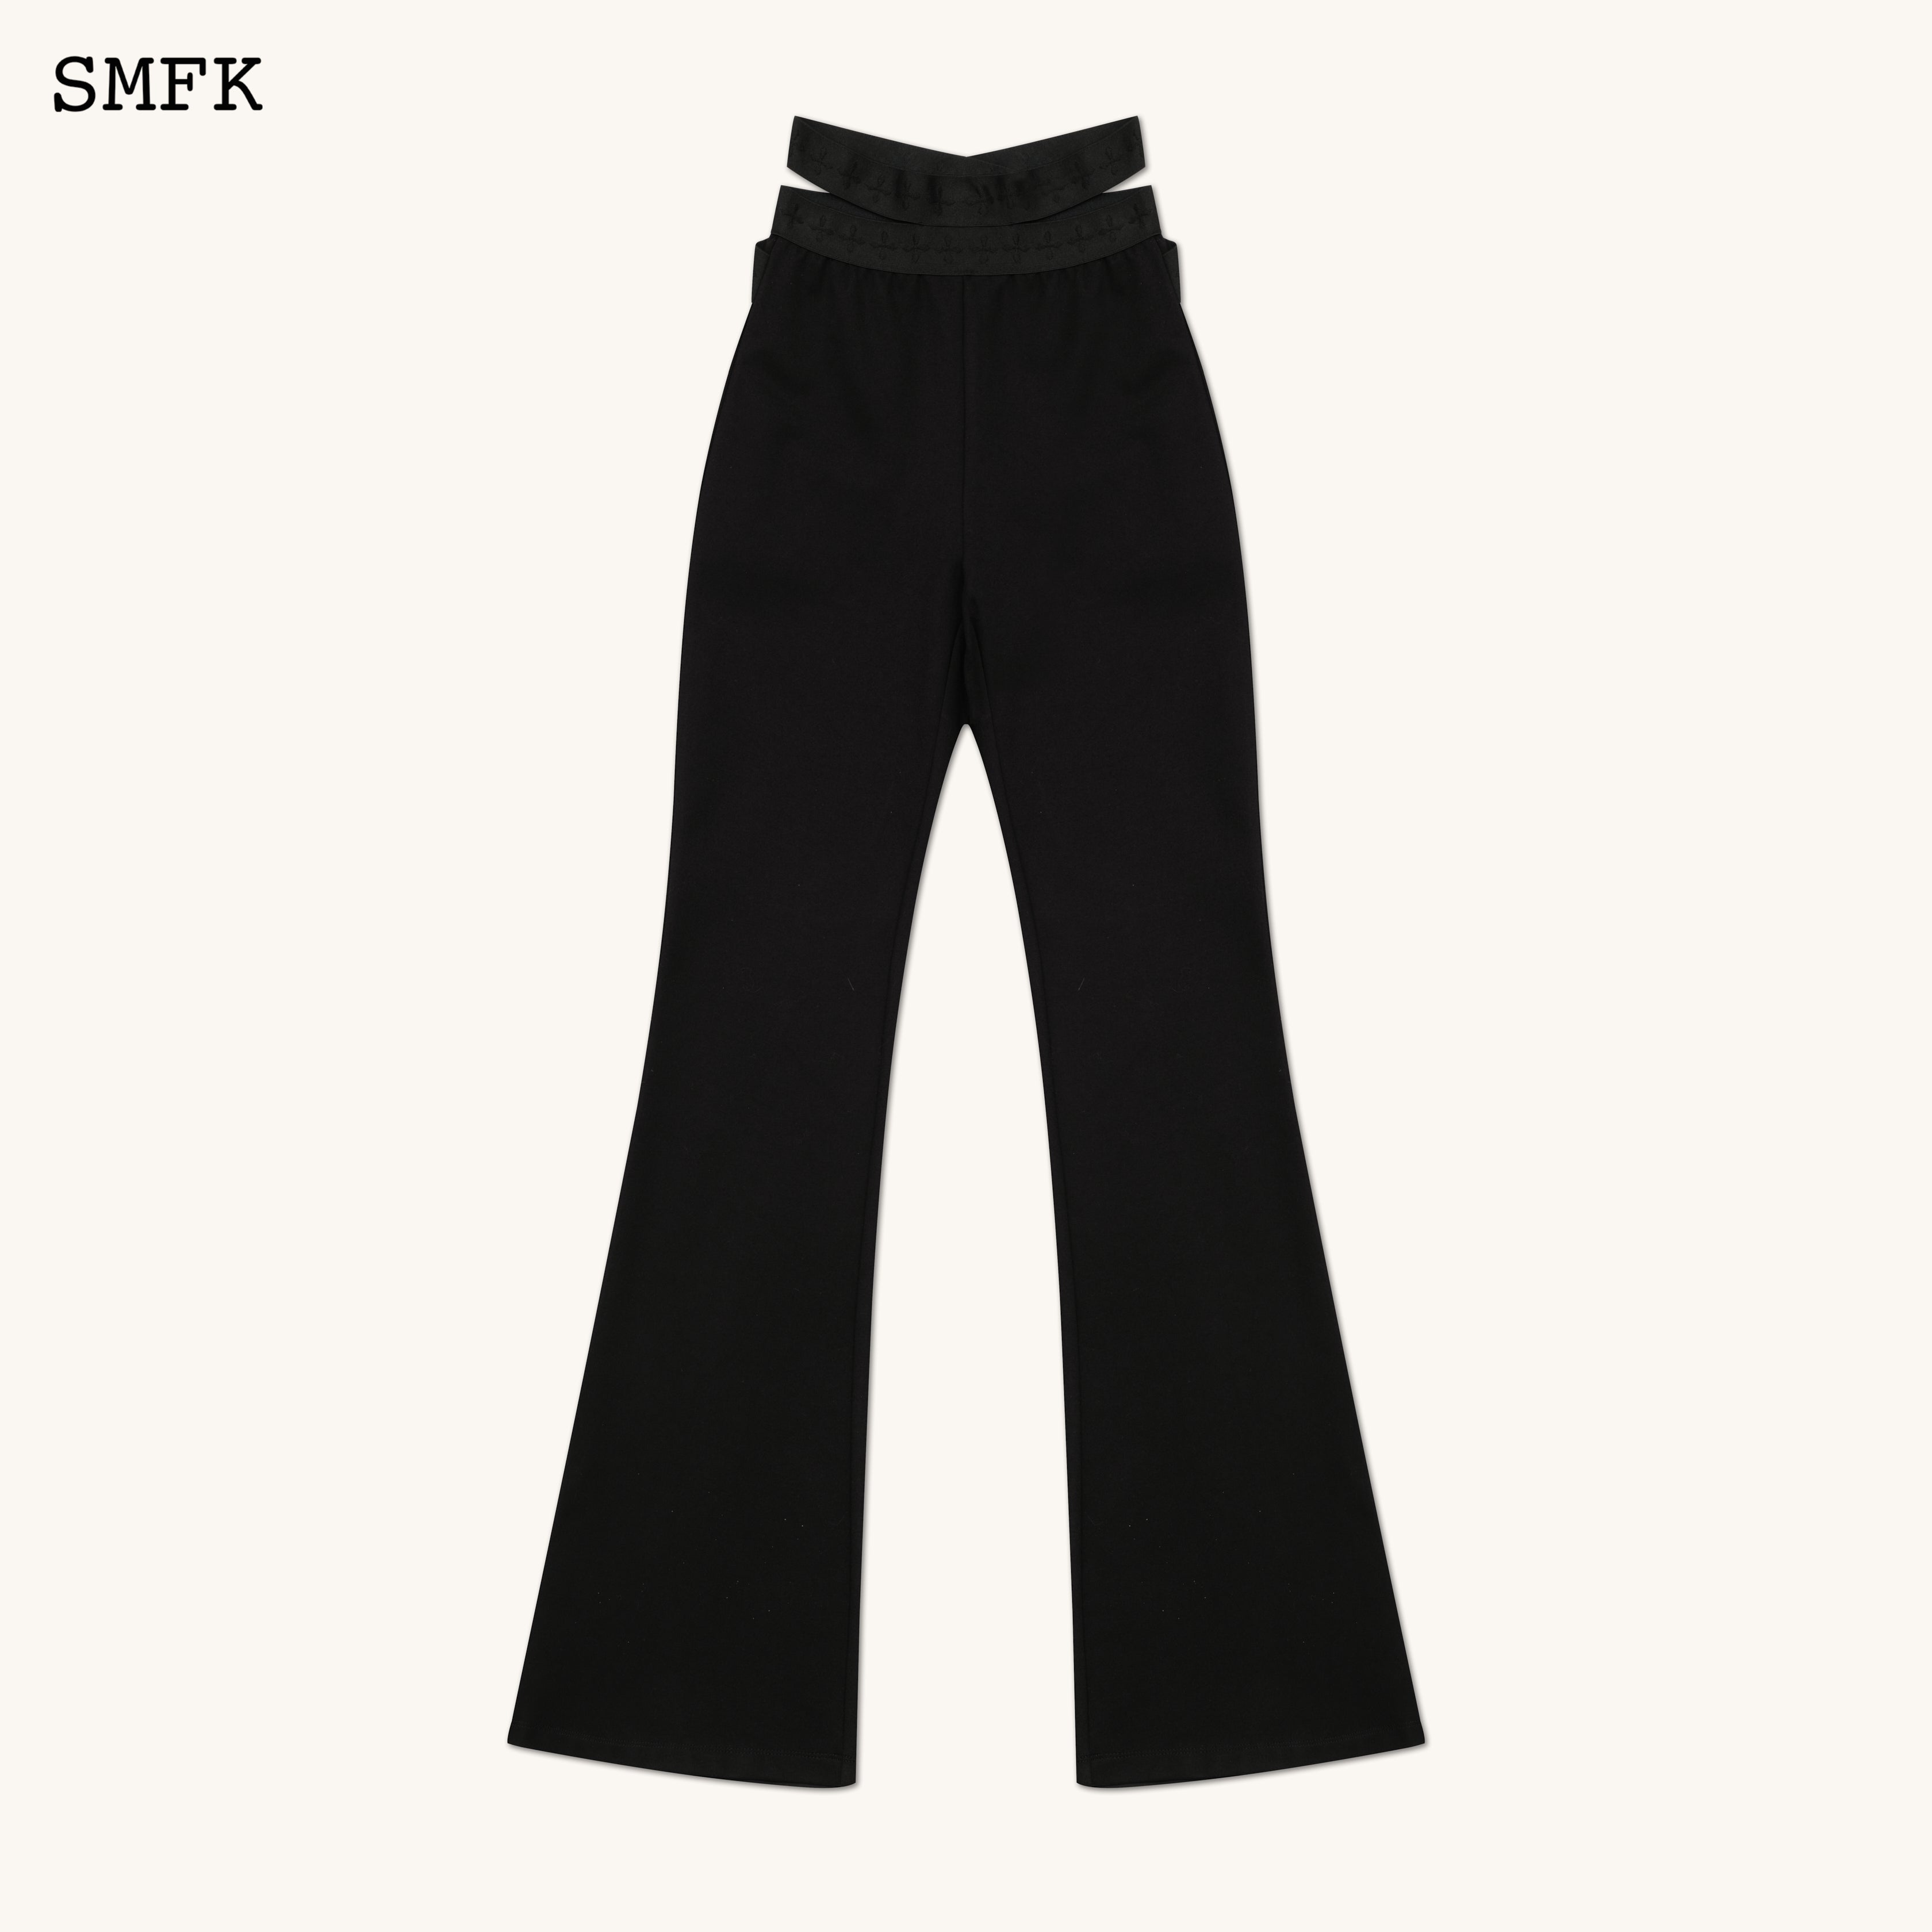 Classic black flared pants